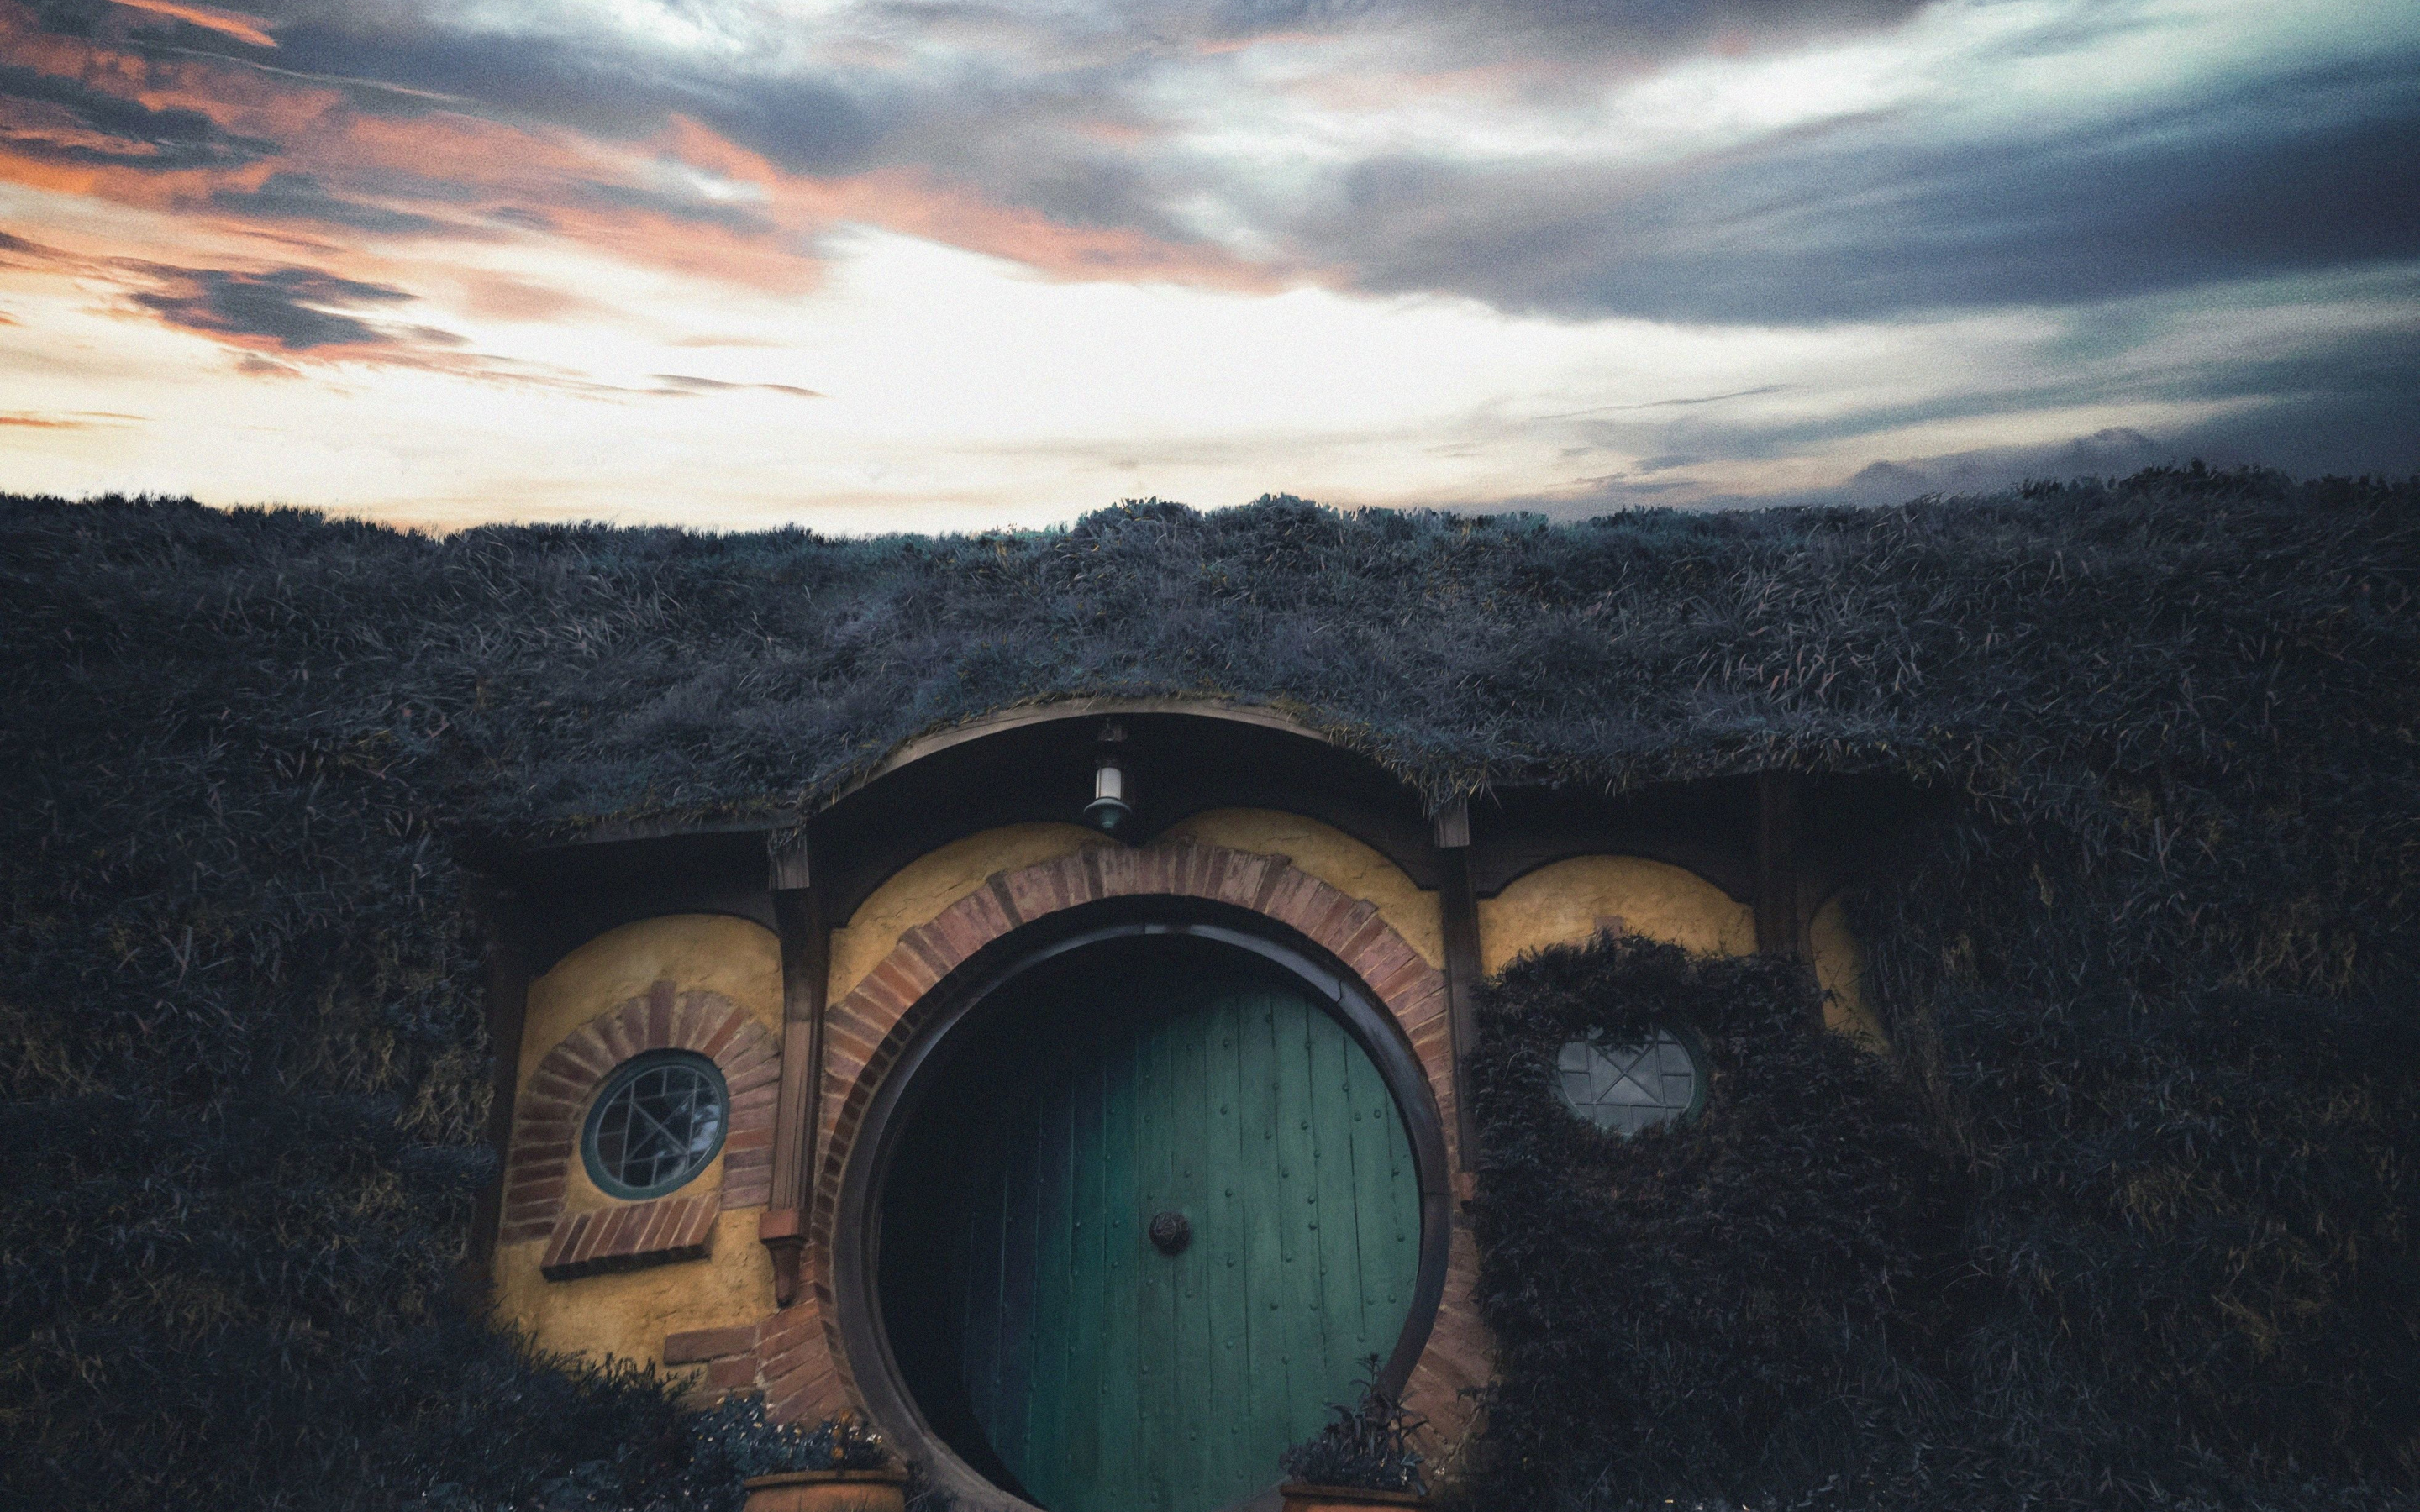 House, The Hobbit, movie set, New Zealand, 2880x1800 wallpaper